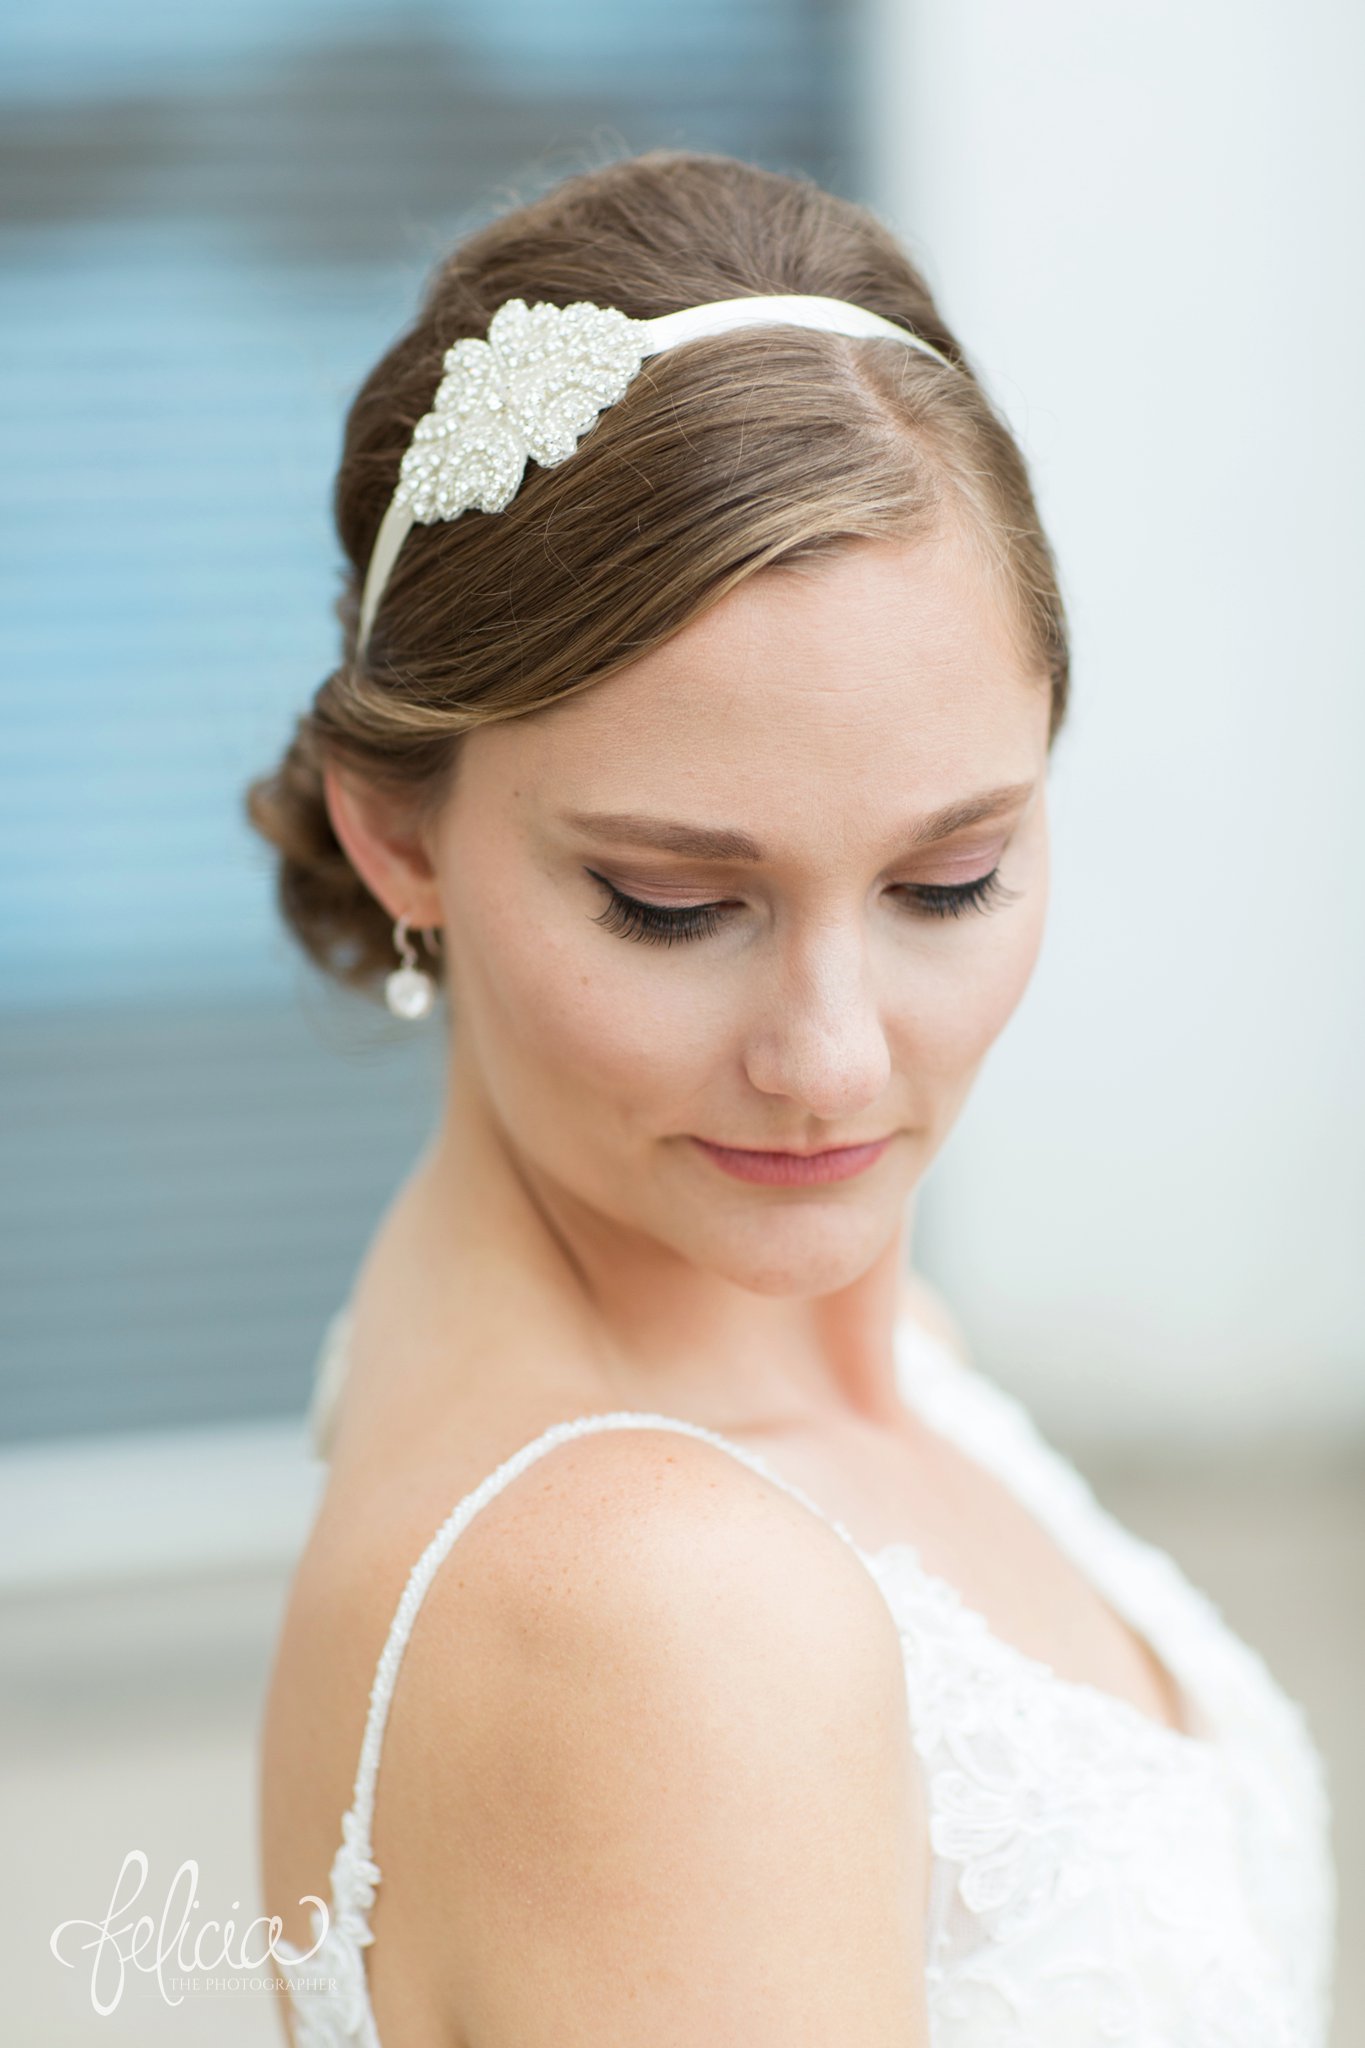 Wedding | Wedding Photography | Wedding Photos | Travel Photographer | Images by feliciathephotographer.com | Kansas | Bride Portrait | Hair Accessories | Headband | Poised 